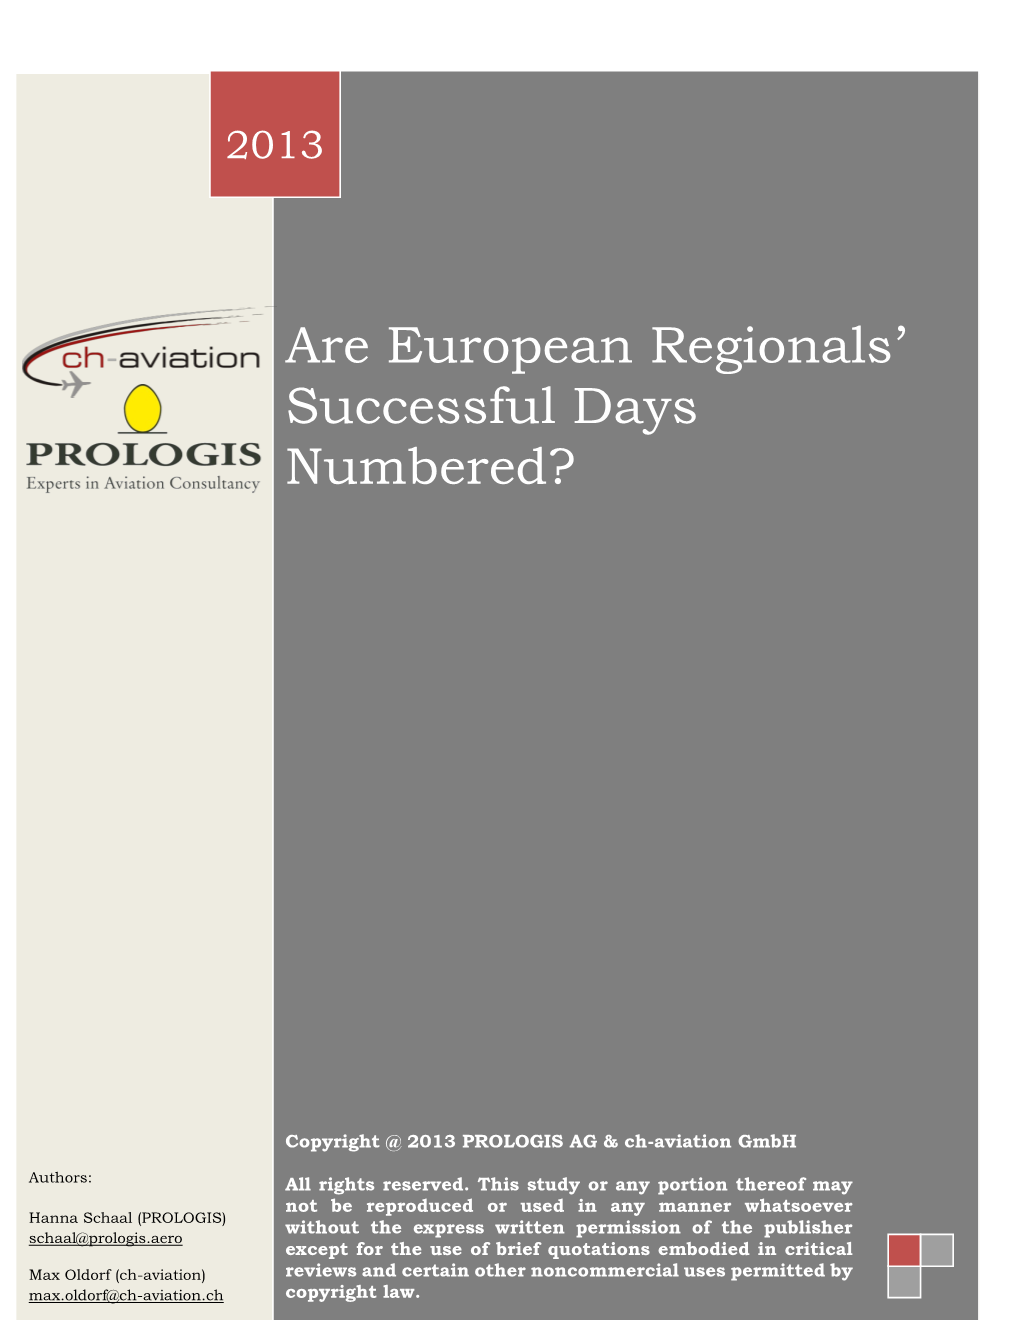 Are European Regionals' Successful Days Numbered?